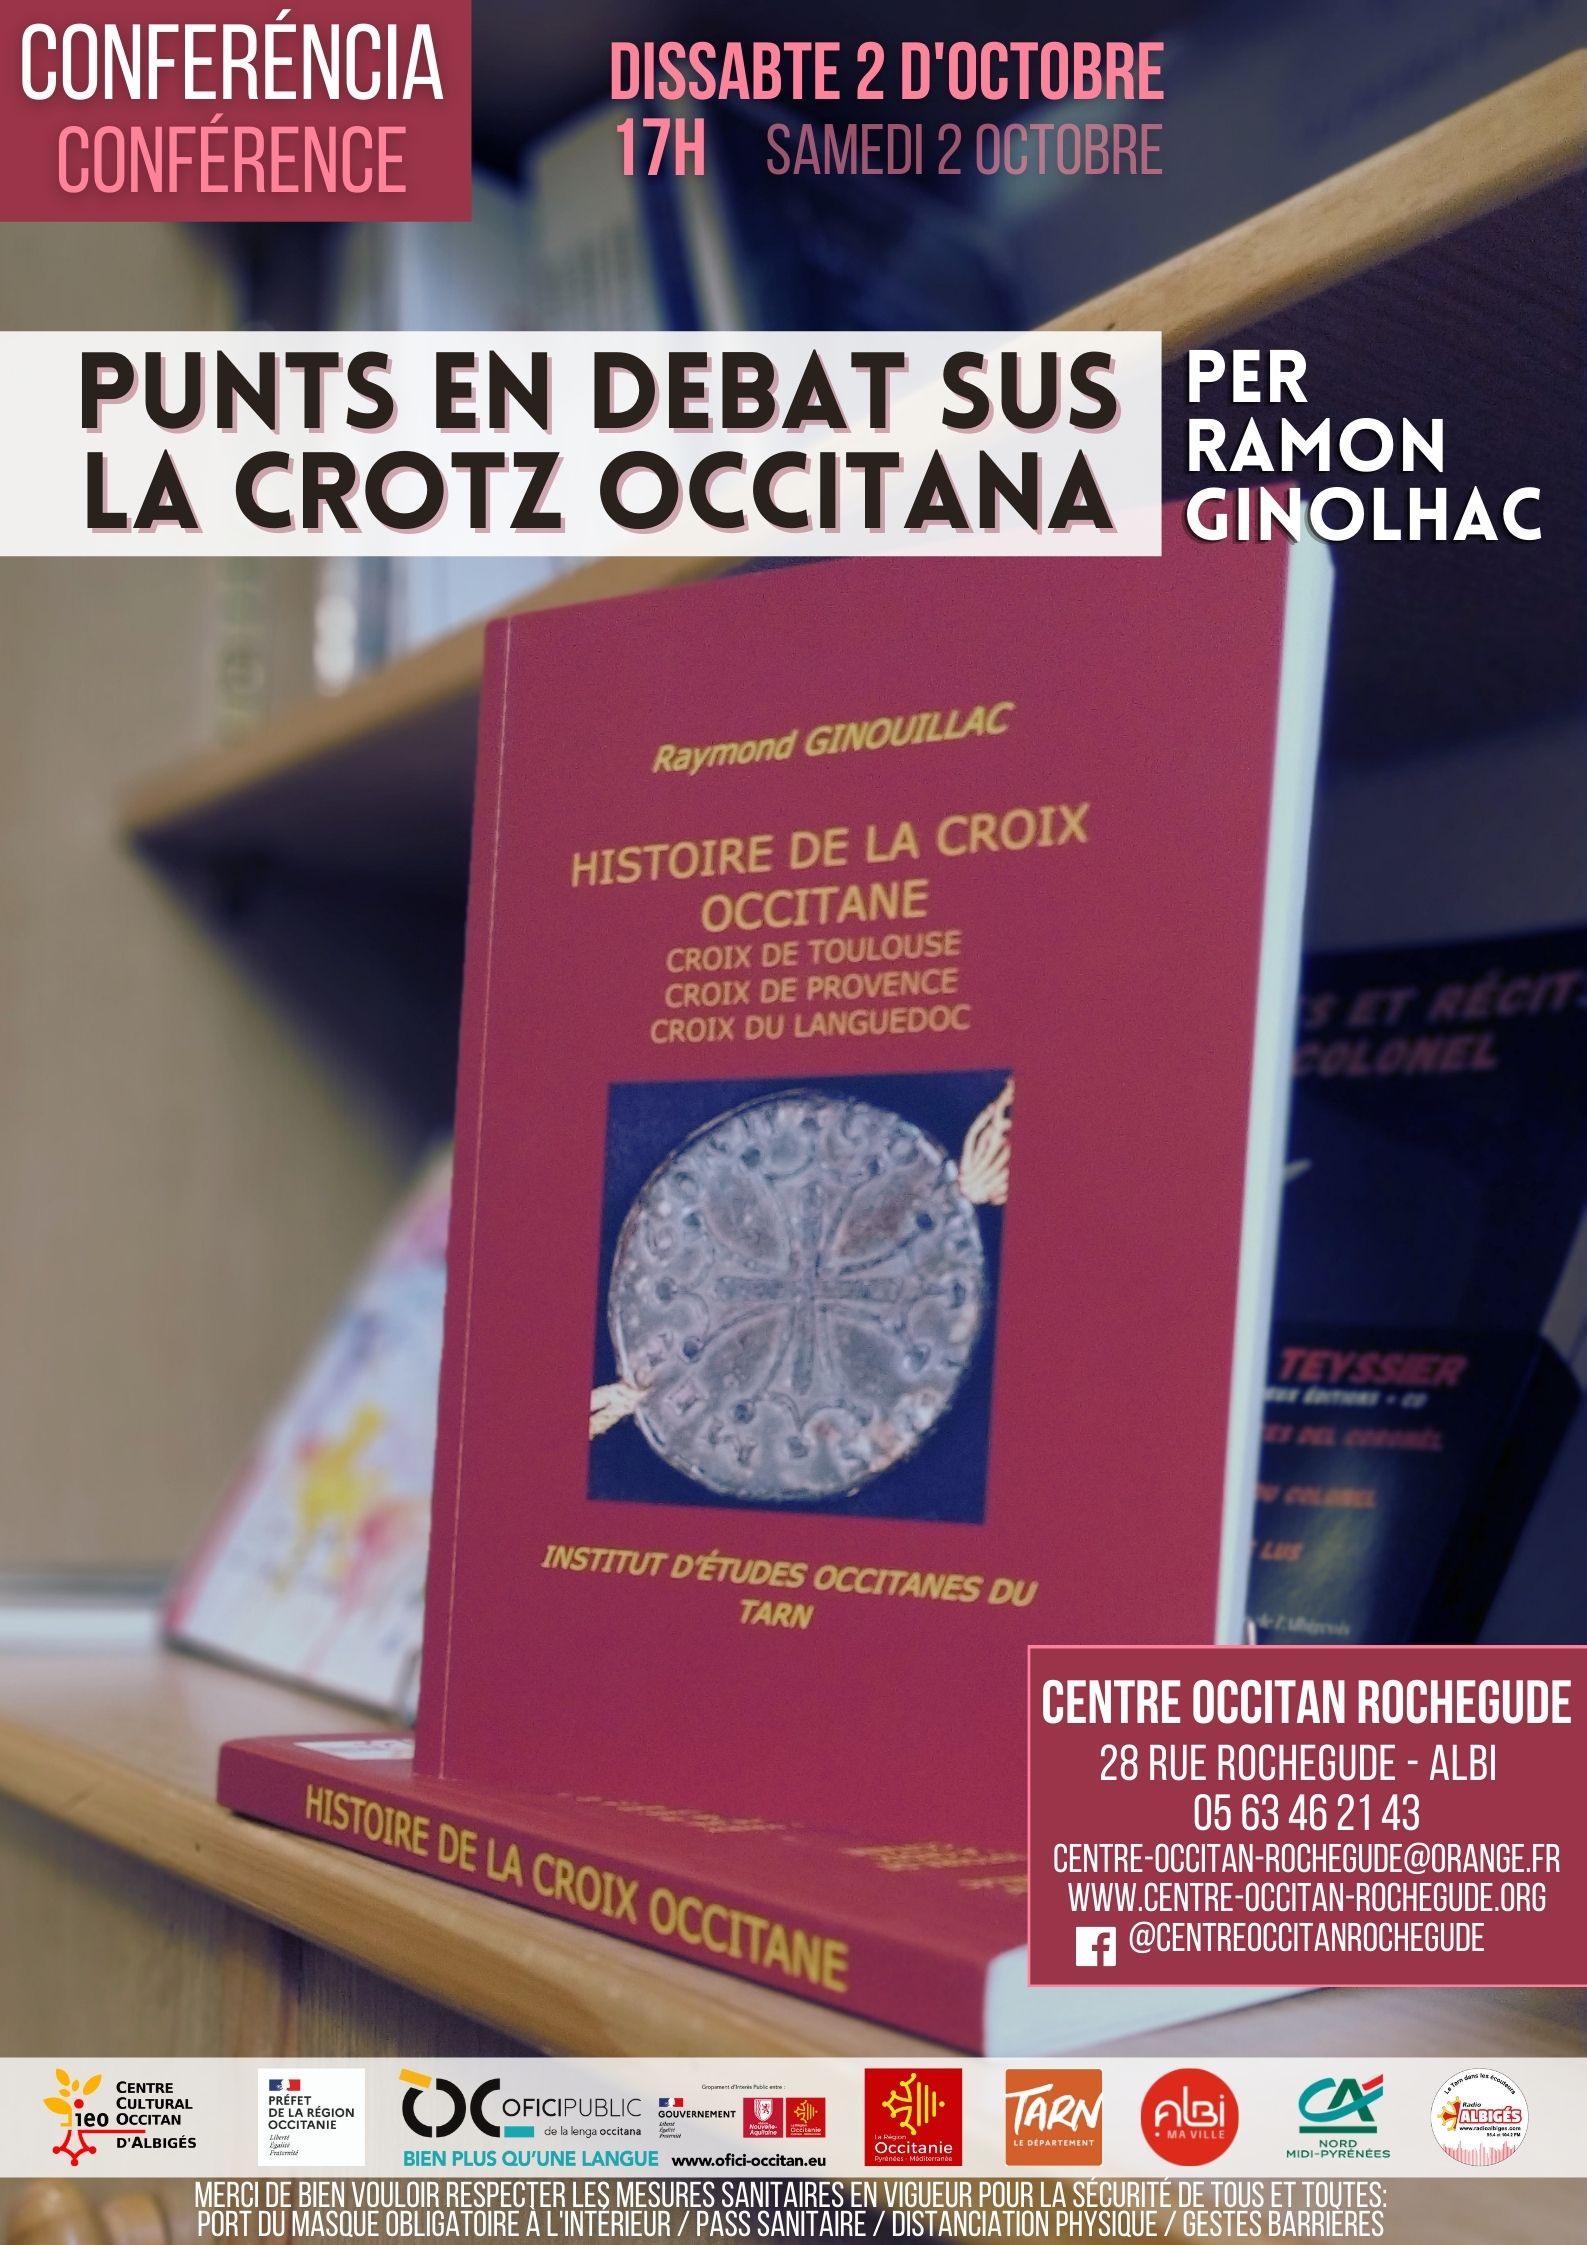 You are currently viewing Conferéncia « Punts en debat sus la crotz occitana » per Ramon Ginolhac